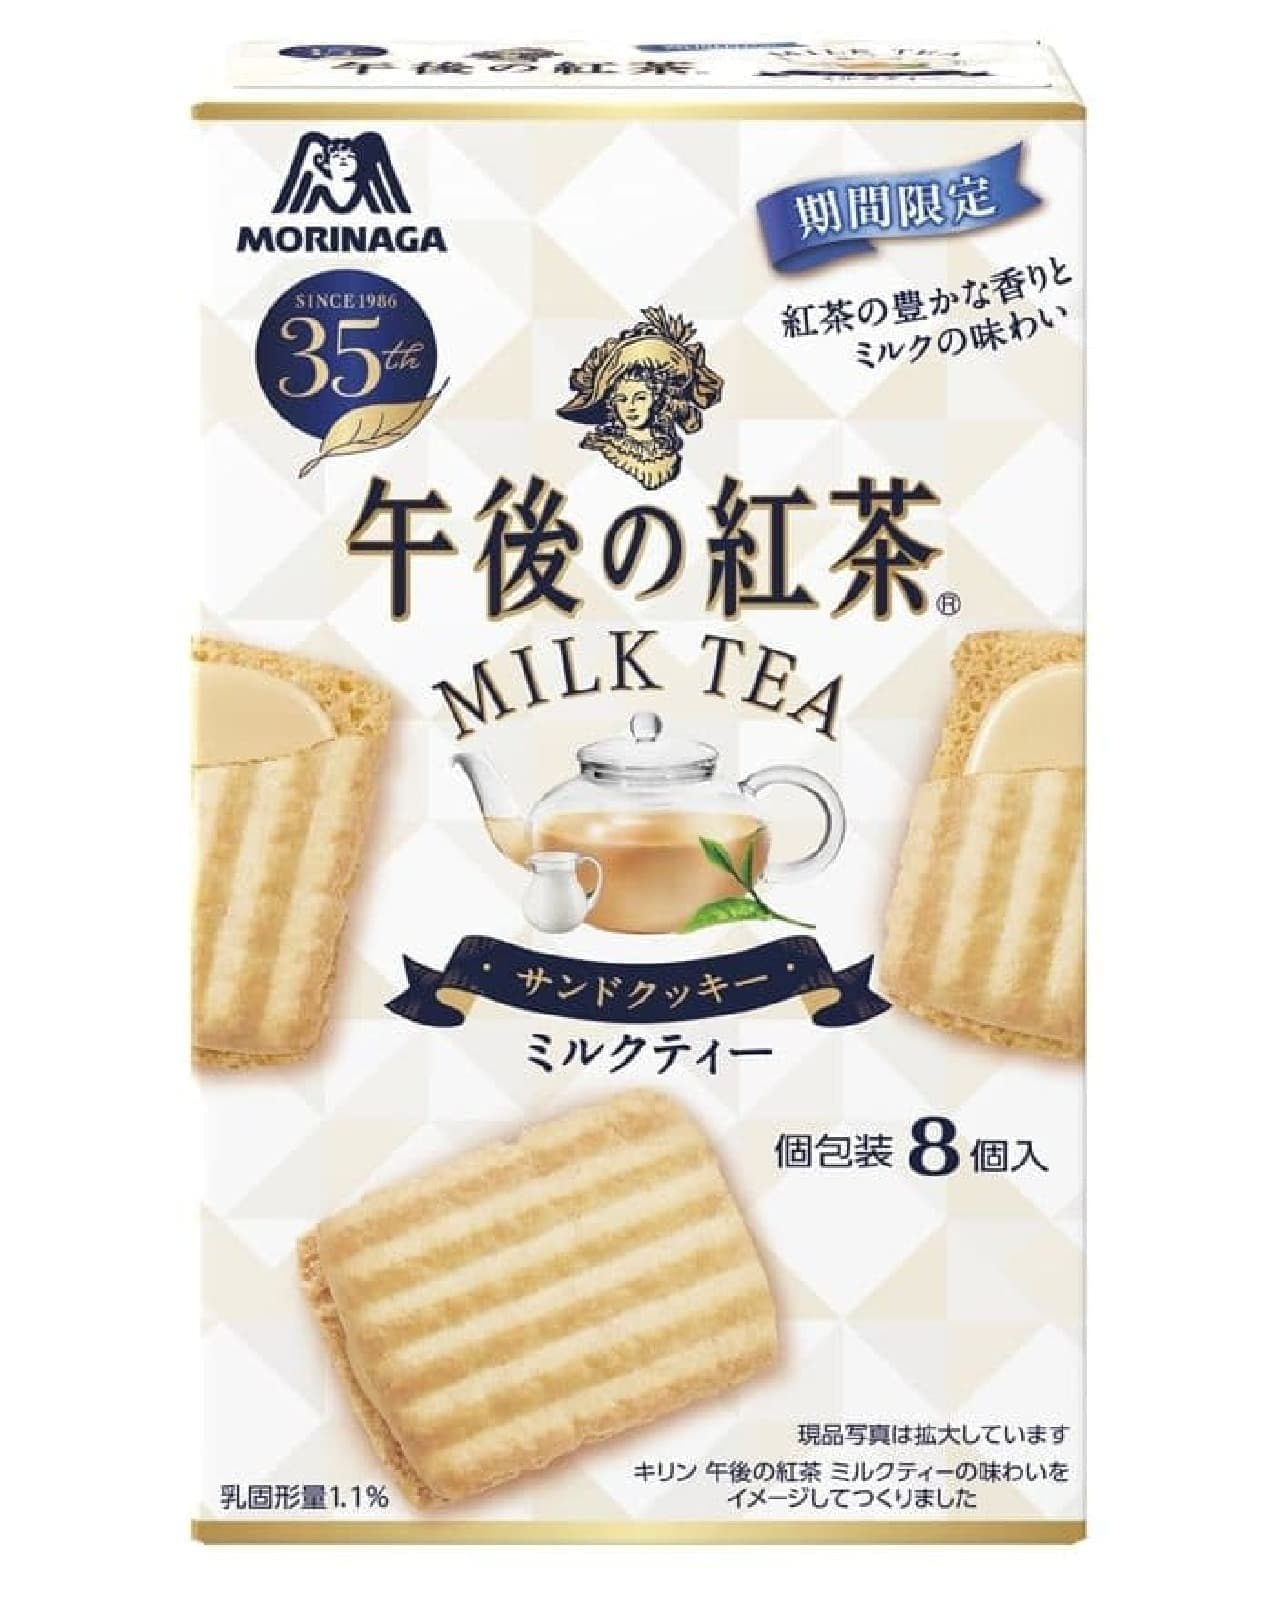 Afternoon tea Milk tea sandwich cookie